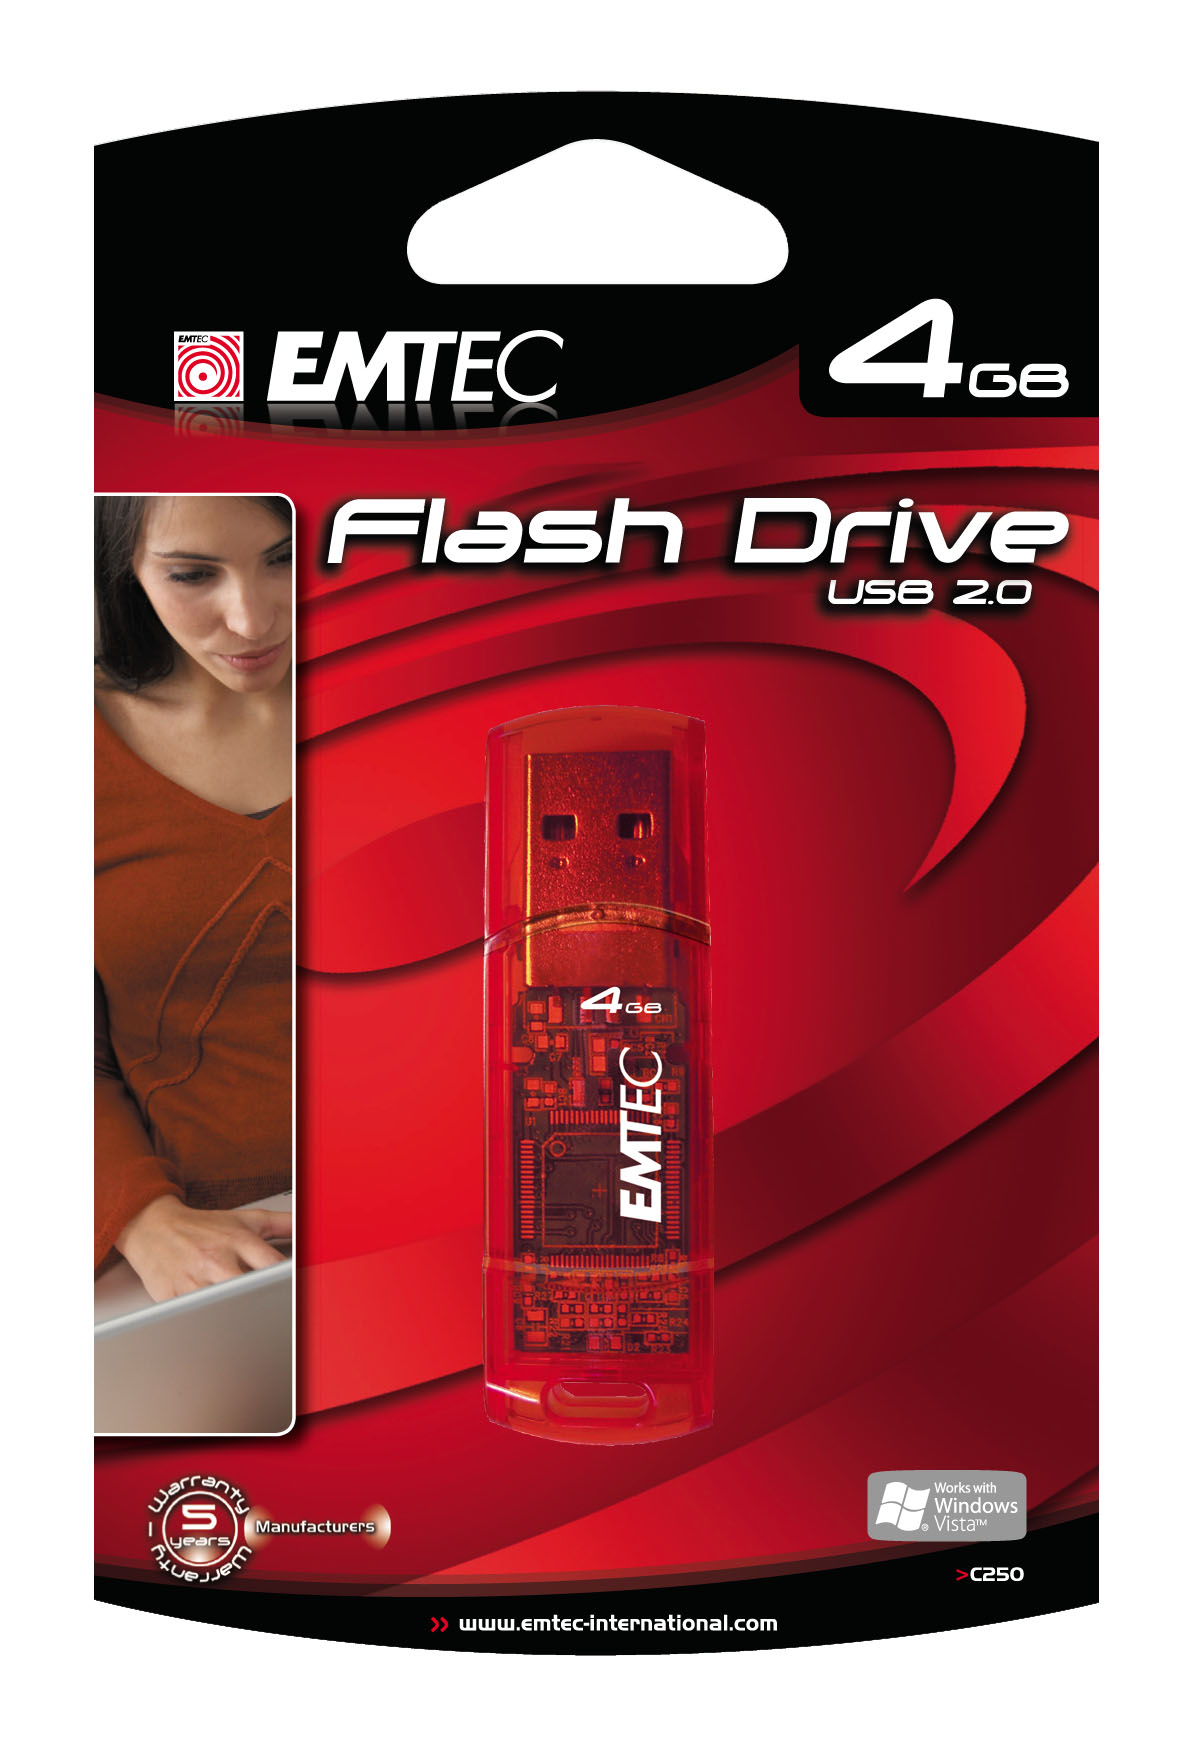 USB flash disk - Emtec, Memory Stick 4 GB